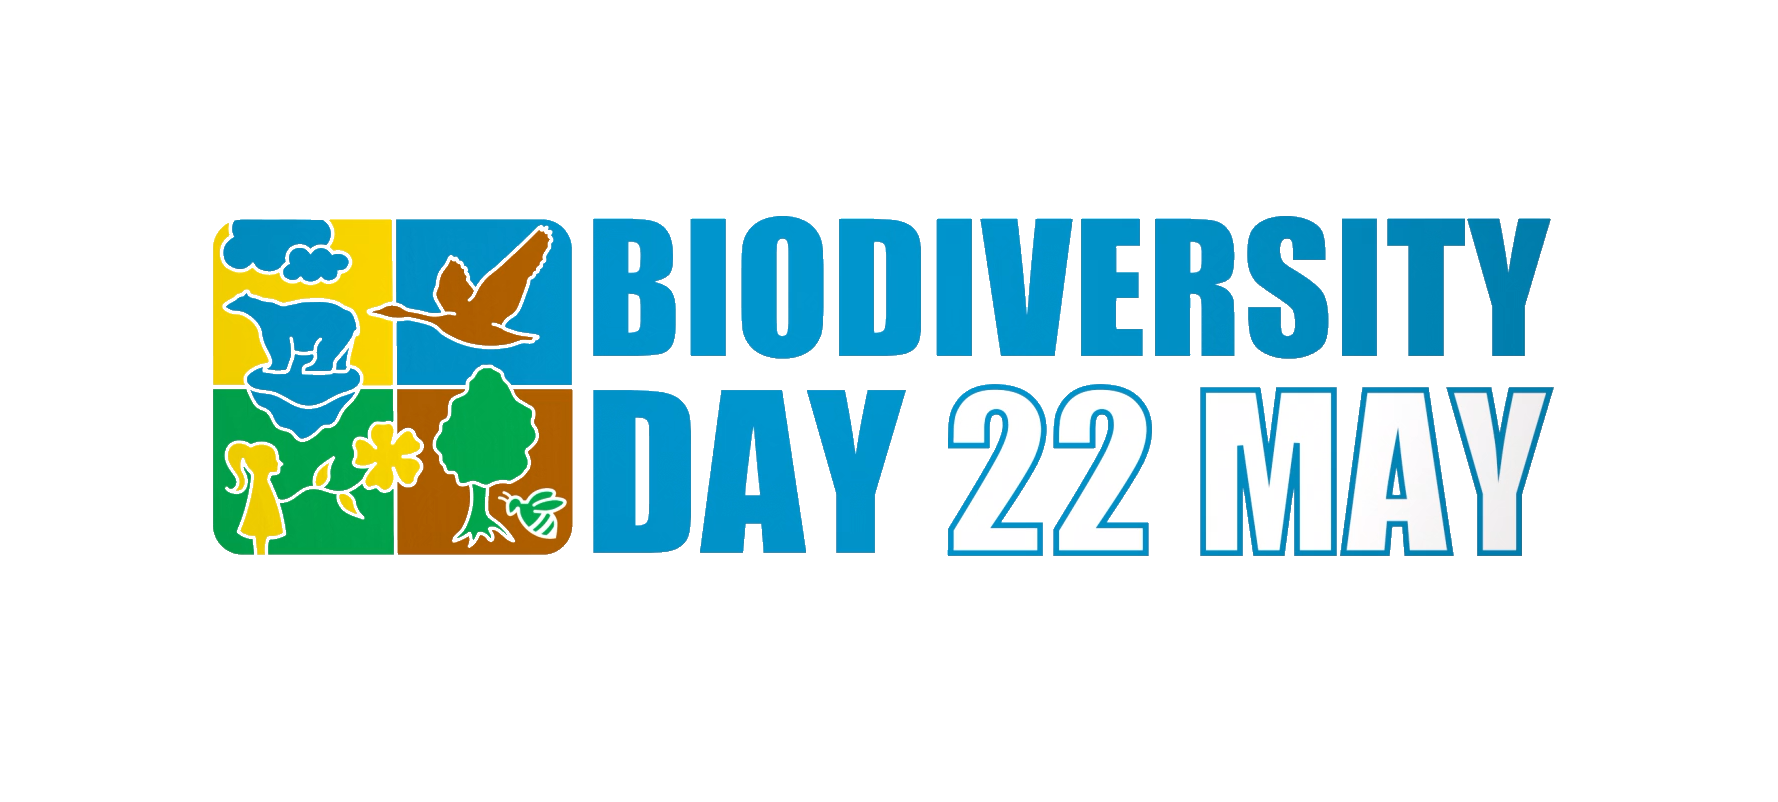 International Day for Biological Diversity logo